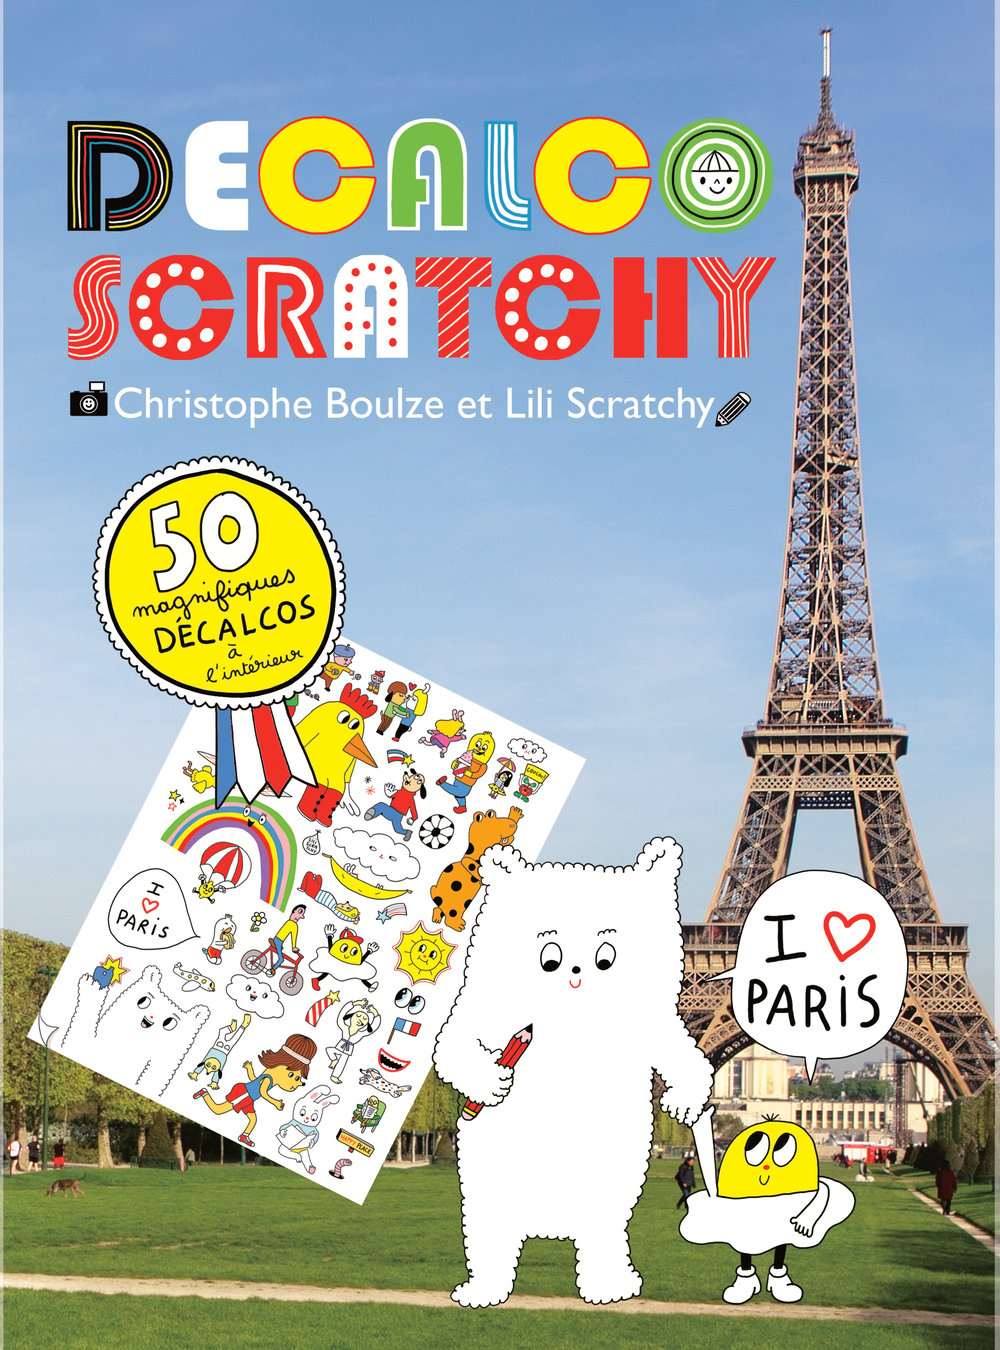 Decalcoscratchy Paris